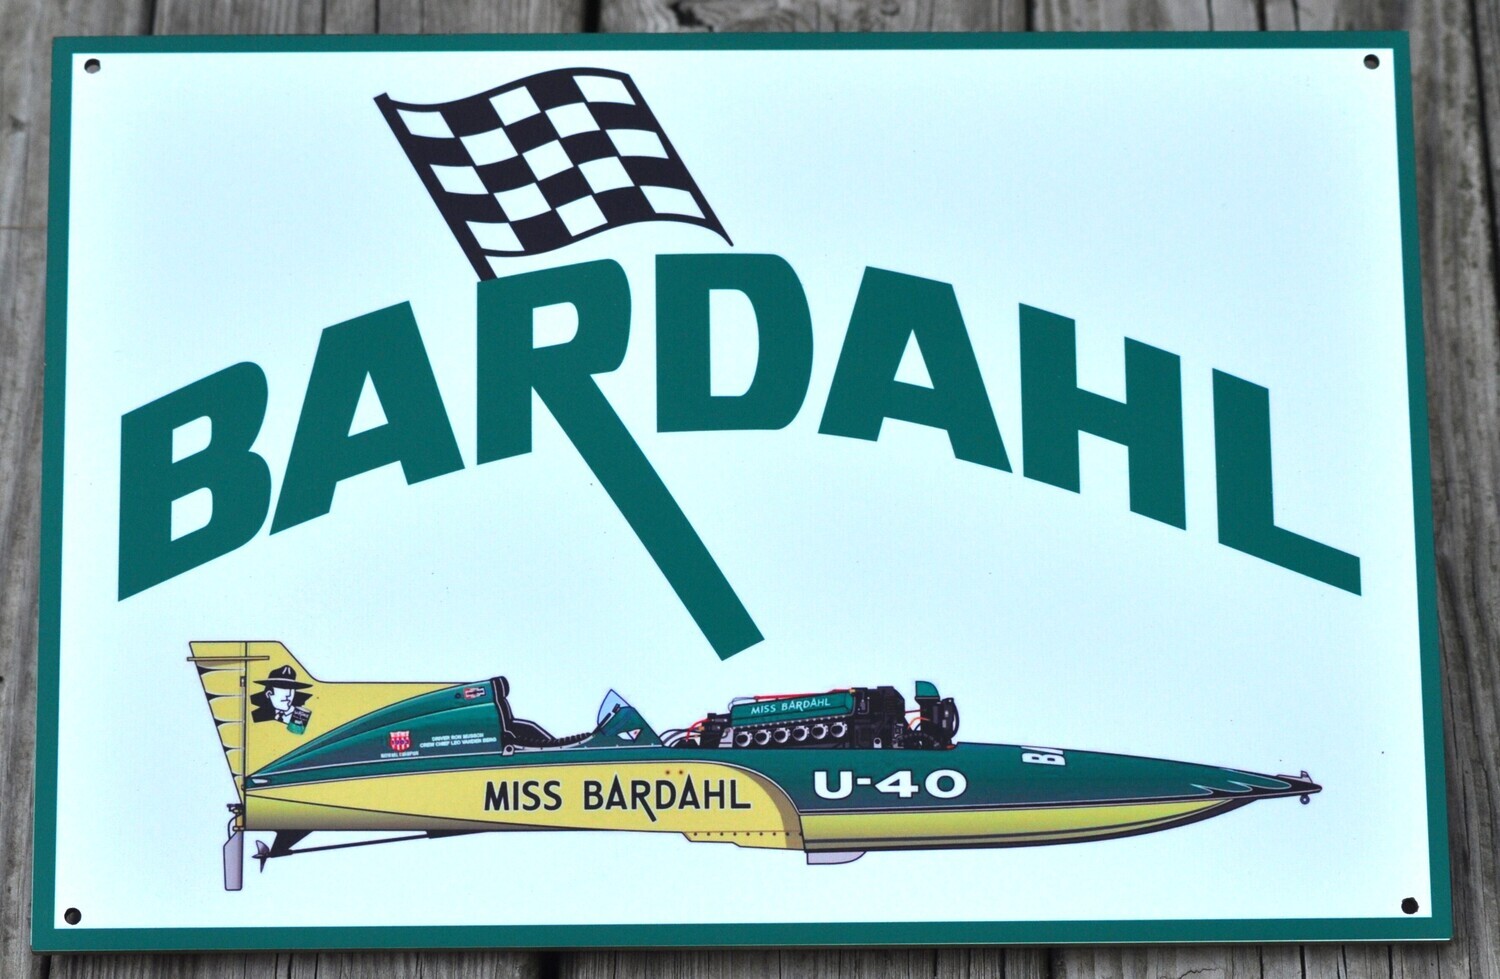 BARDAHL Hydroplane sign